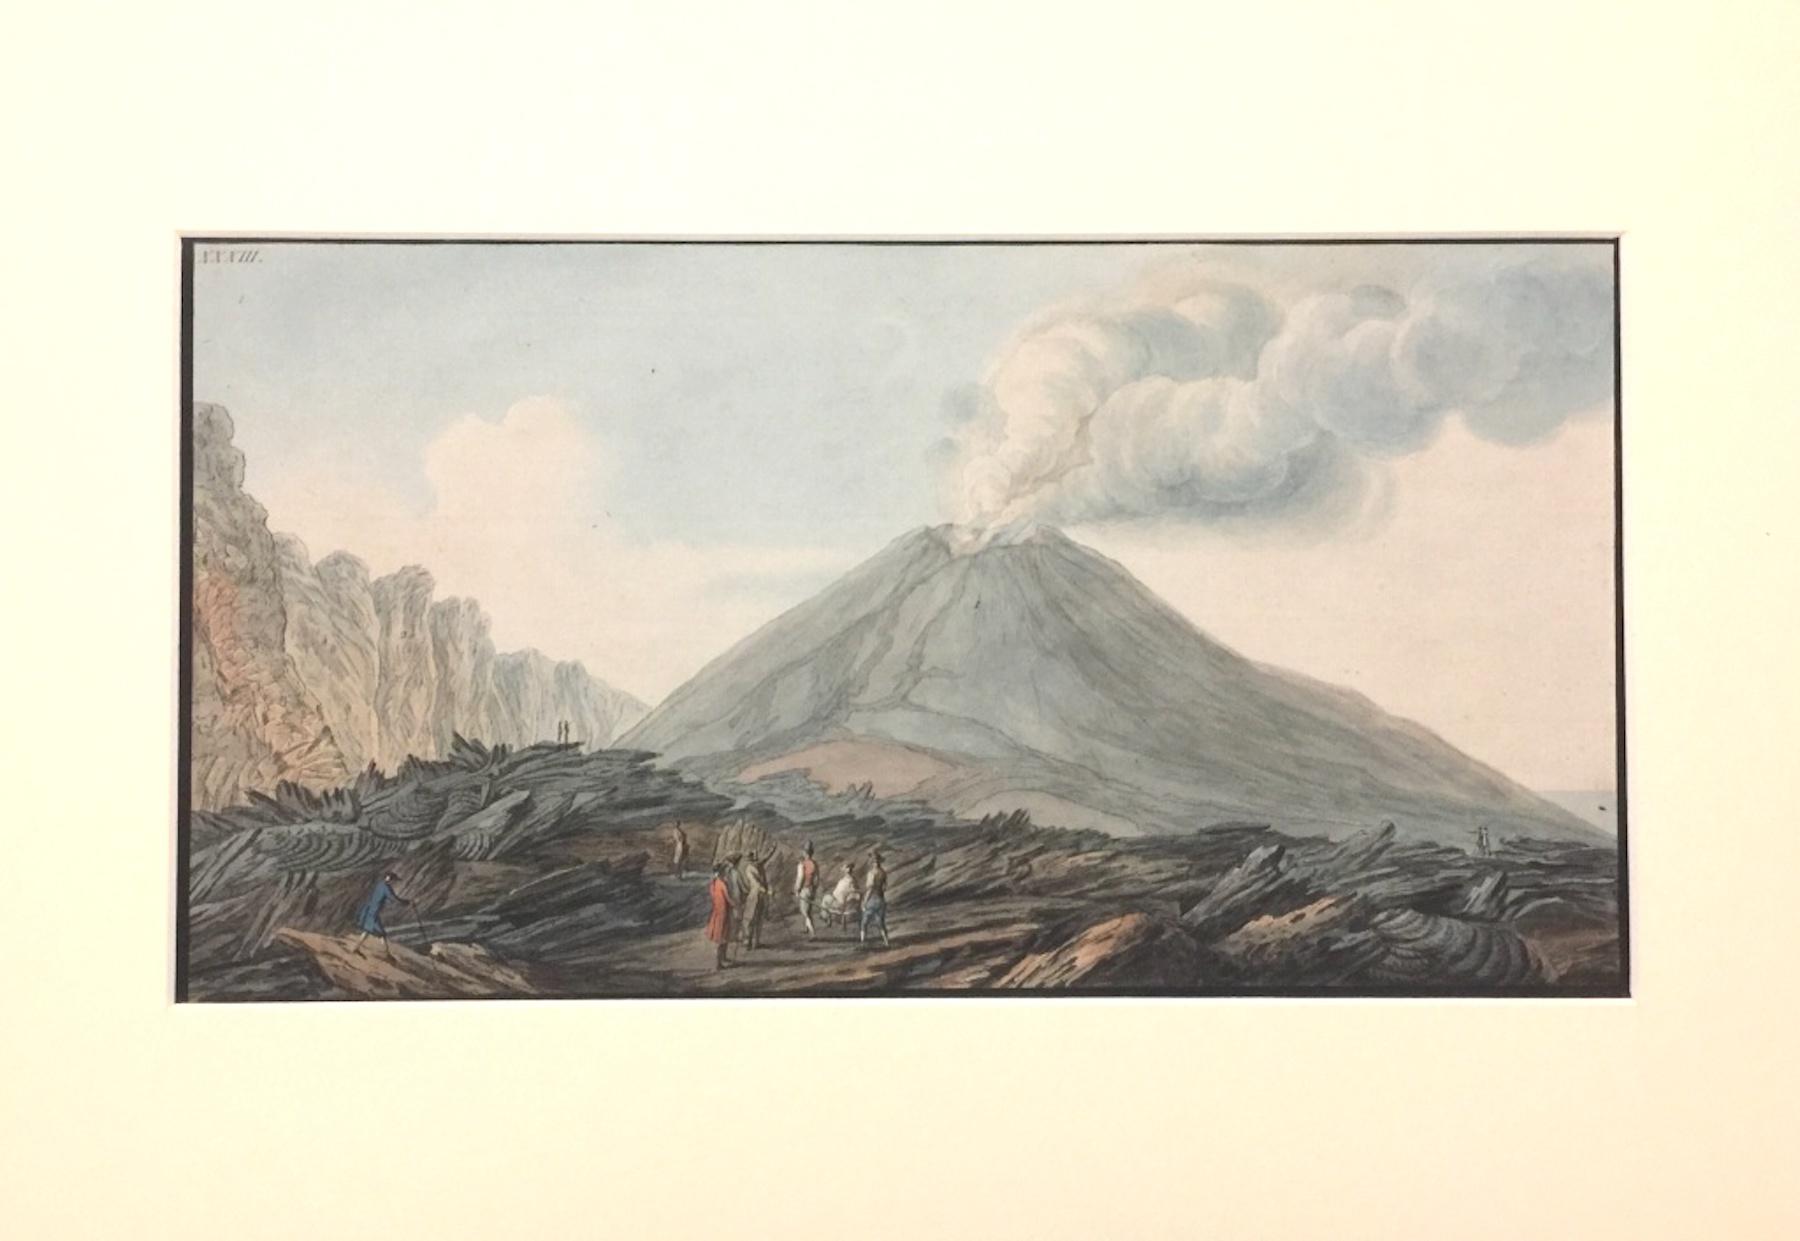 Pietro Fabris Figurative Print - Landscape "Campi Phlegraei - Plate XXXIII" Naples - By Hamilton-Fabris